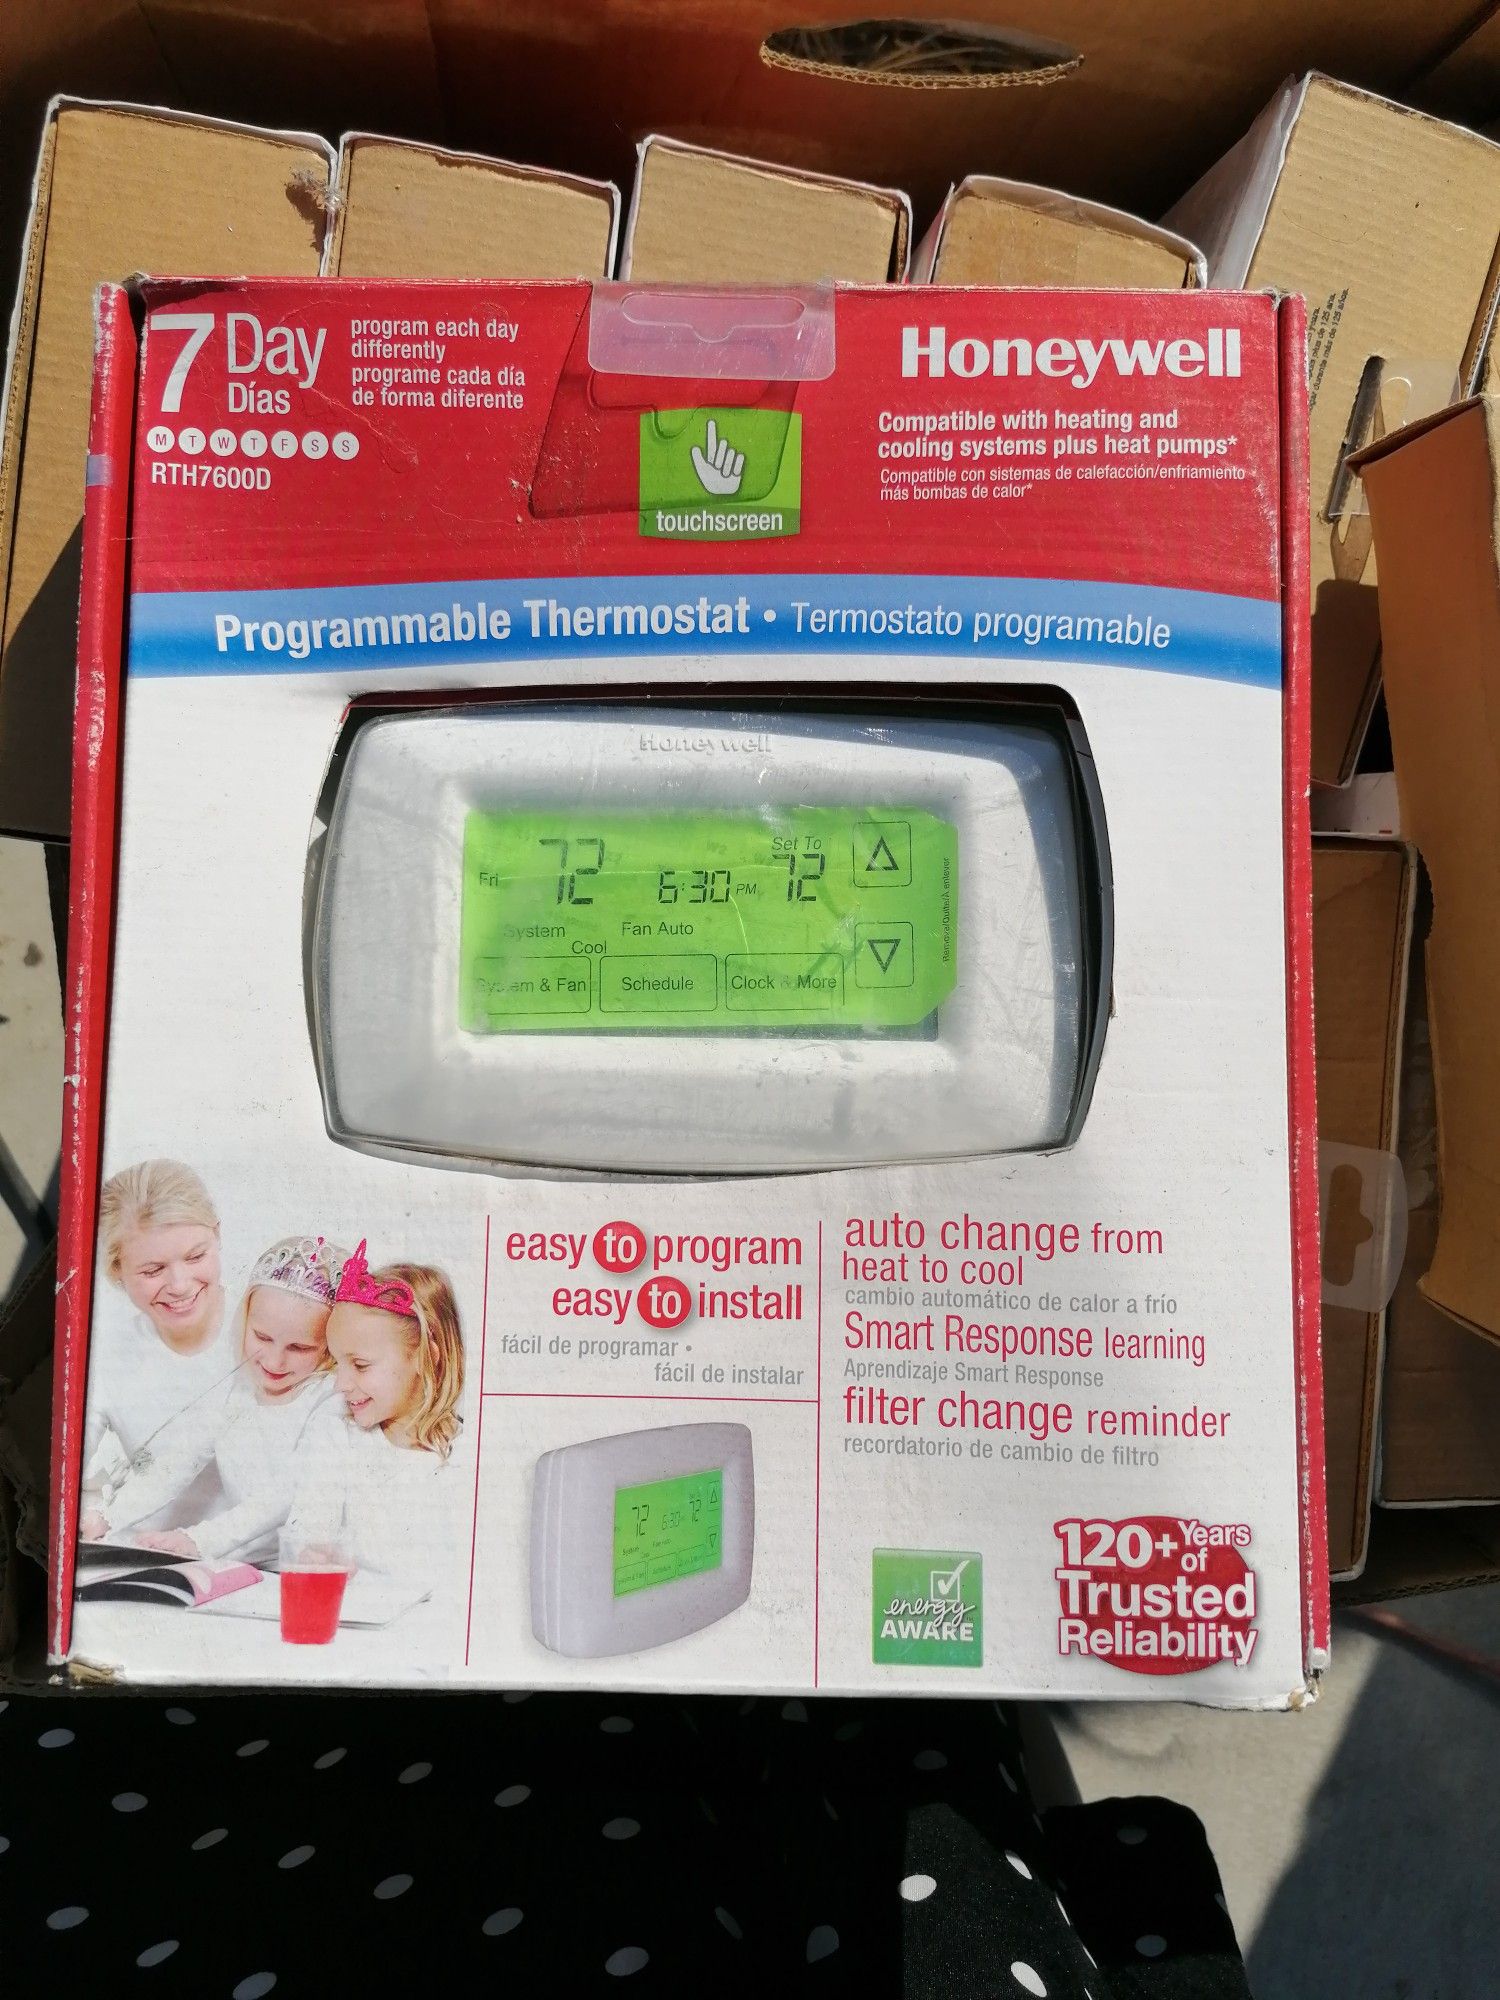 Brand new HoneyWell programable thermostat